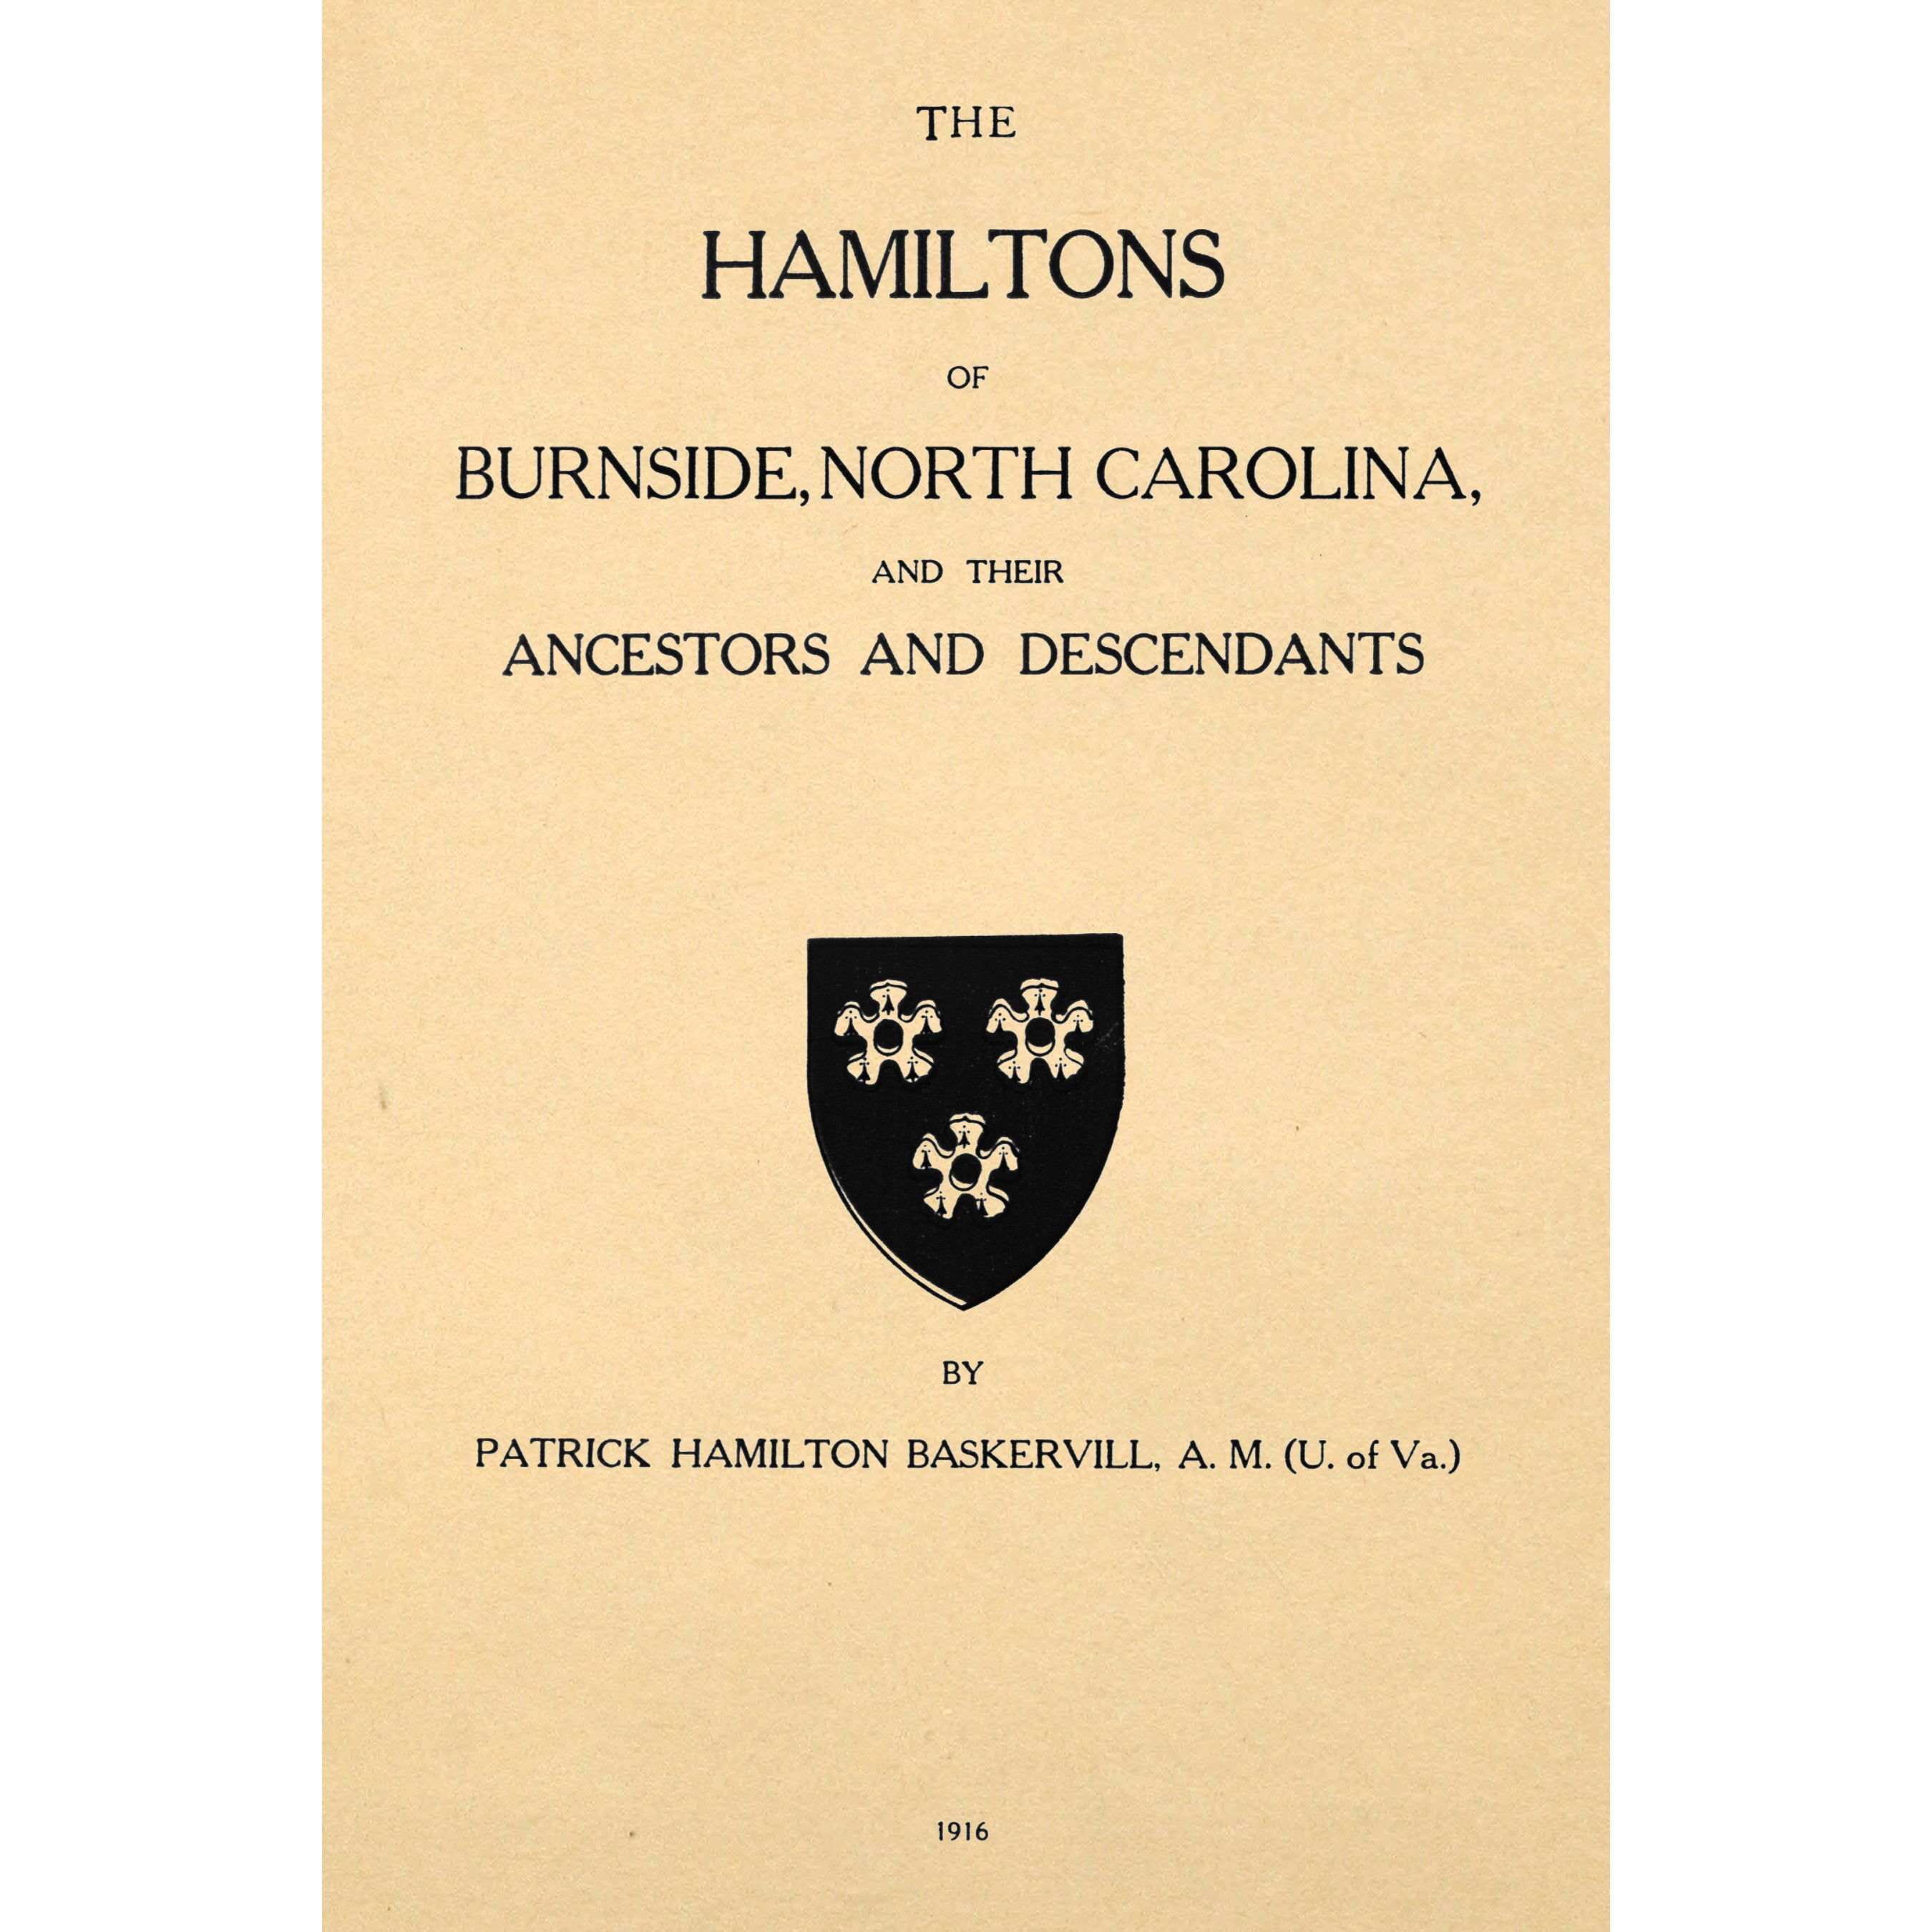 The Hamiltons of Burnside, North Carolina and Their Ancestors and Descendants